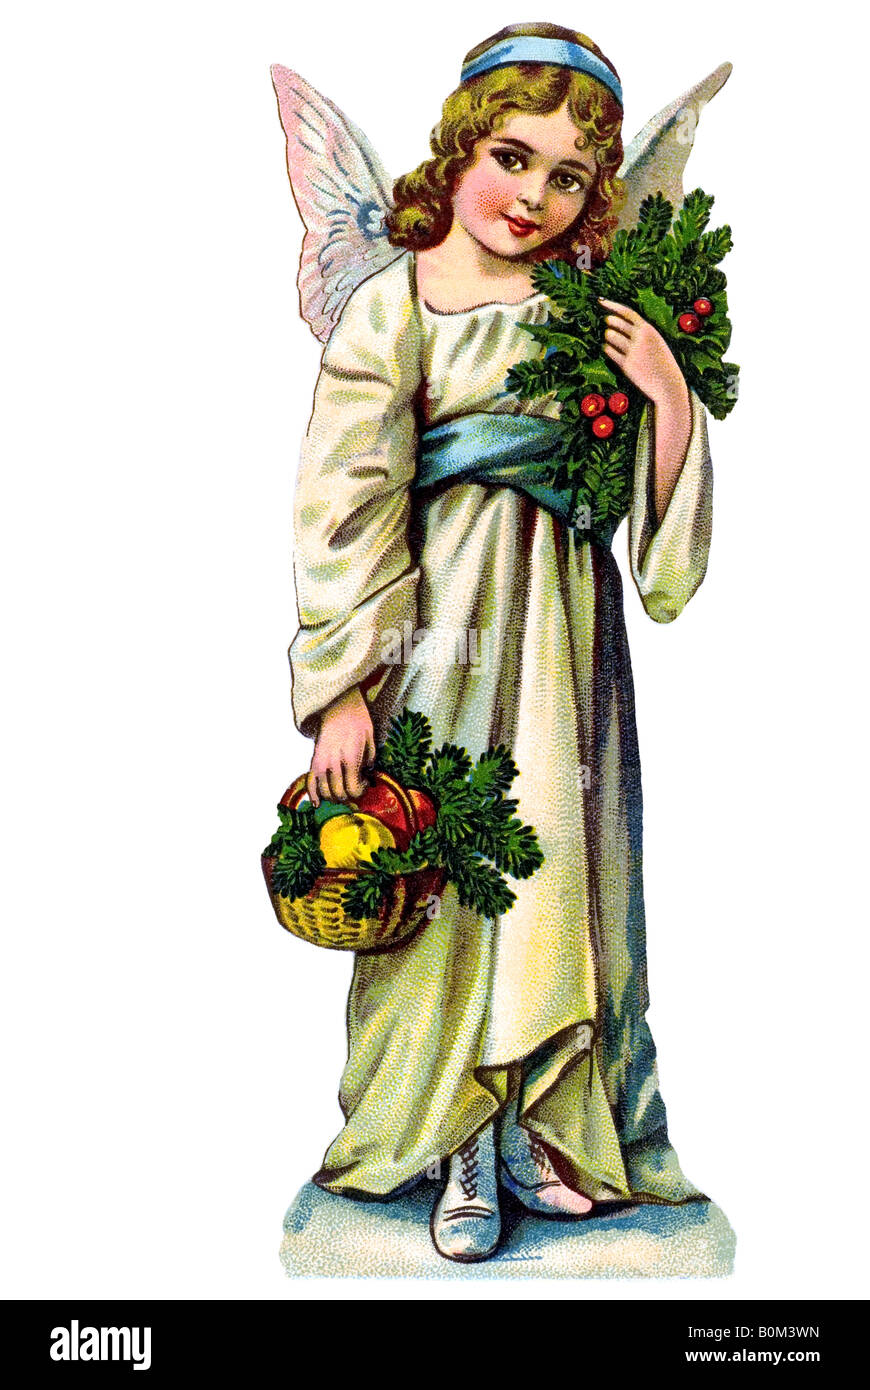 smiling children angel white dress mistletoe red berries basket apples fir branches 19th century Germany Stock Photo